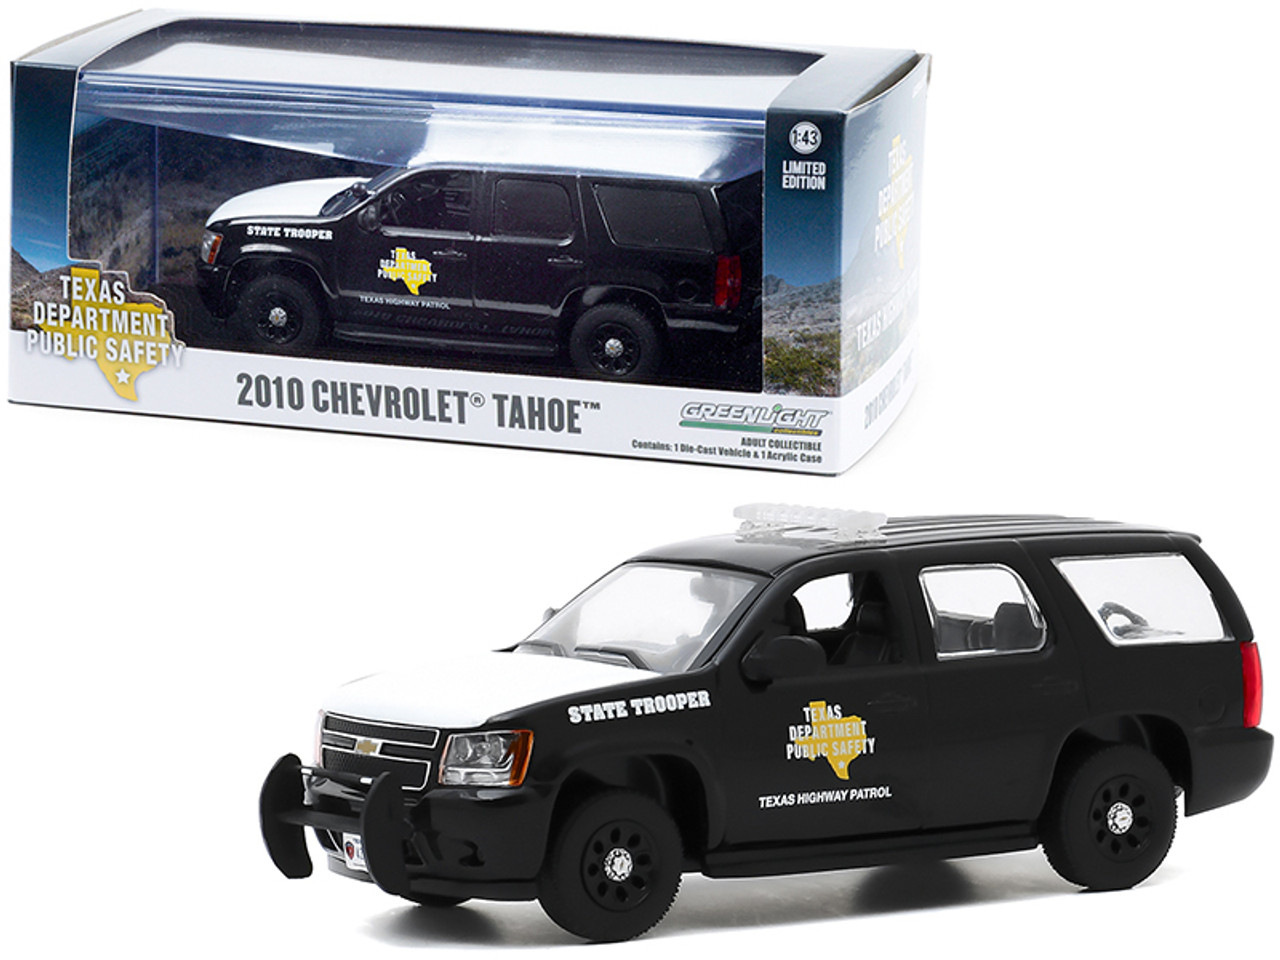 2010 Chevrolet Tahoe Black with White Hood "Texas Highway Patrol State Trooper" 1/43 Diecast Model Car by Greenlight